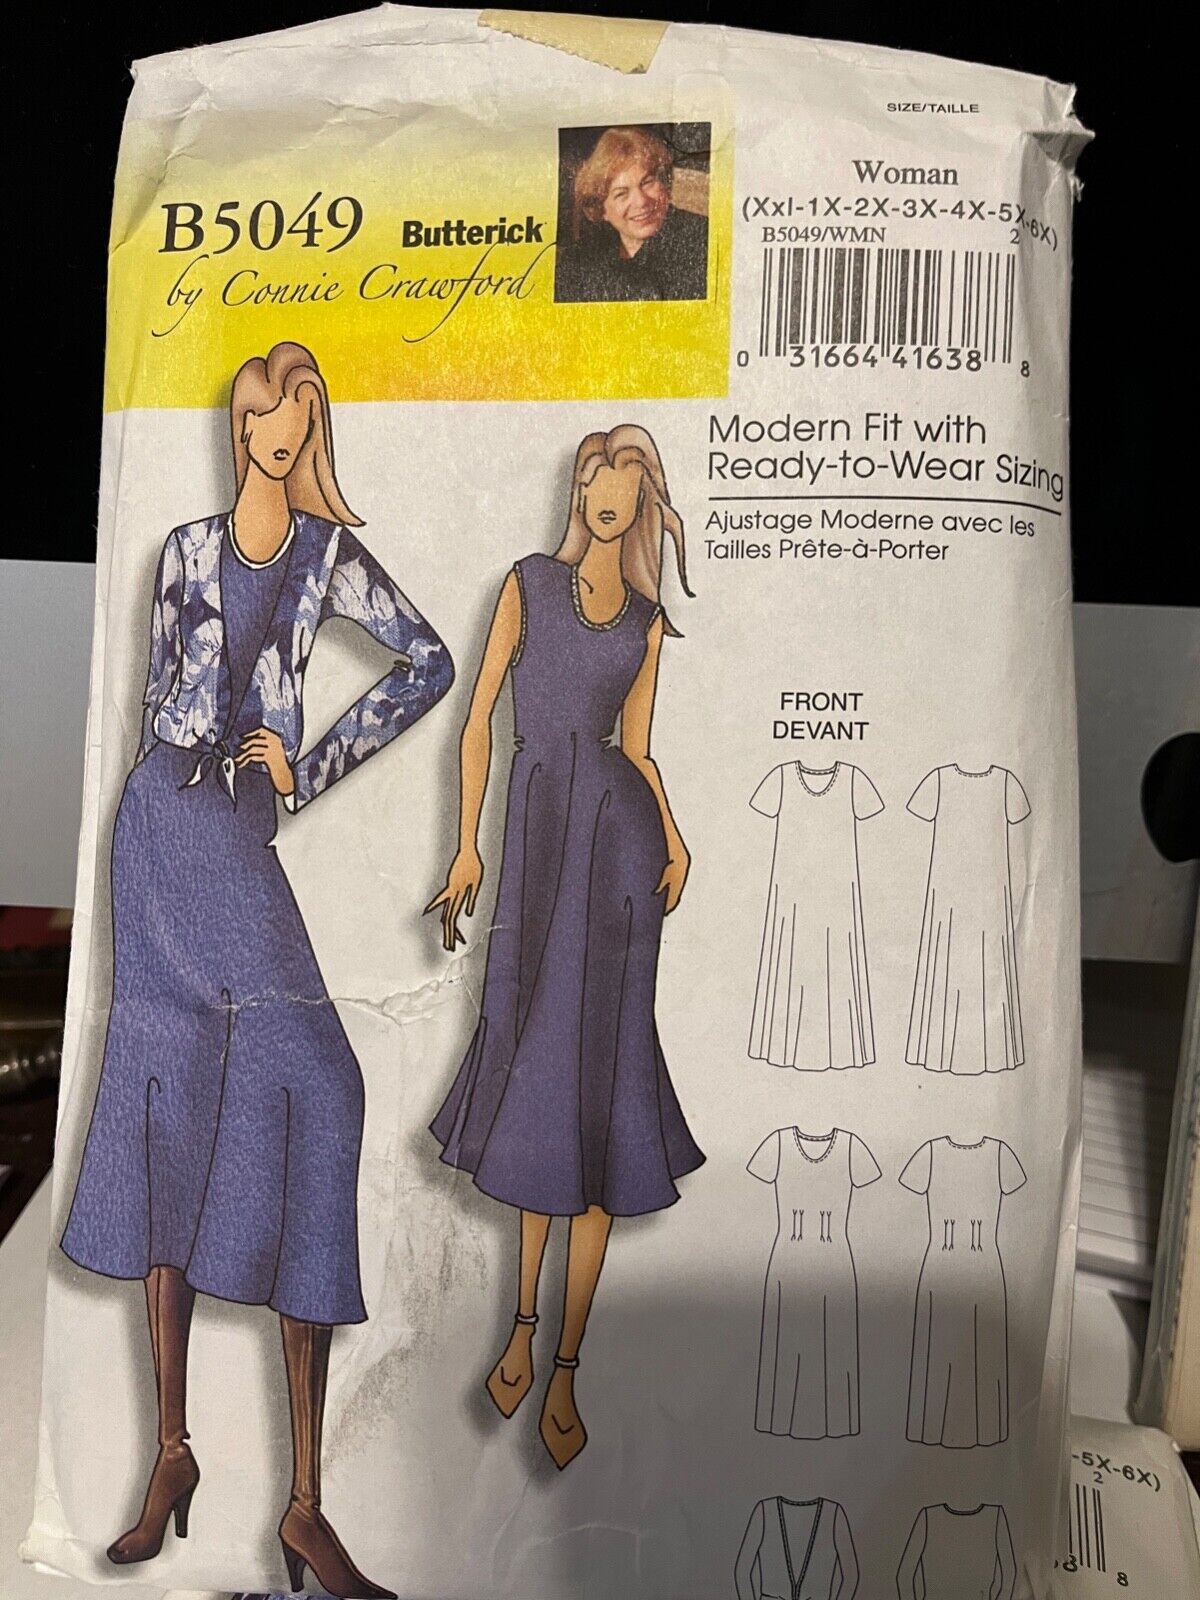 Butterick pattern 5049 misses/womensdress and blouse sizes XXl-1X-2X-3X-4X-5X-6X